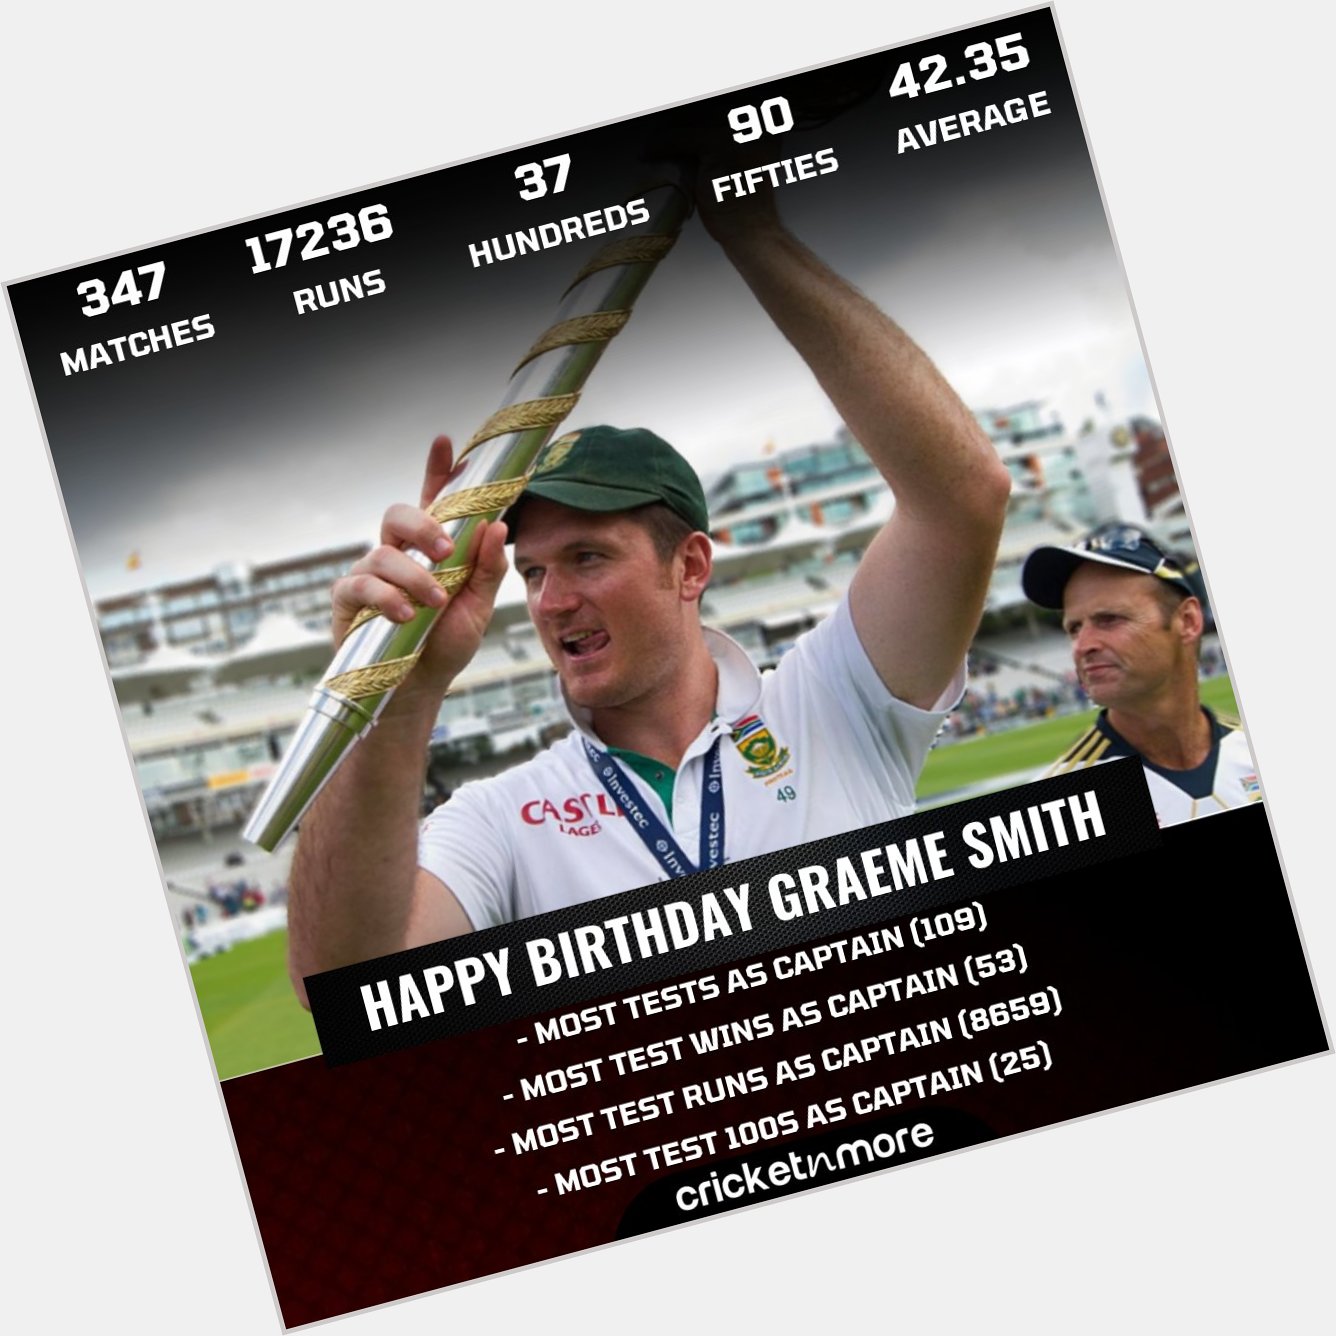 Happy Birthday, Graeme Smith!
.
.    